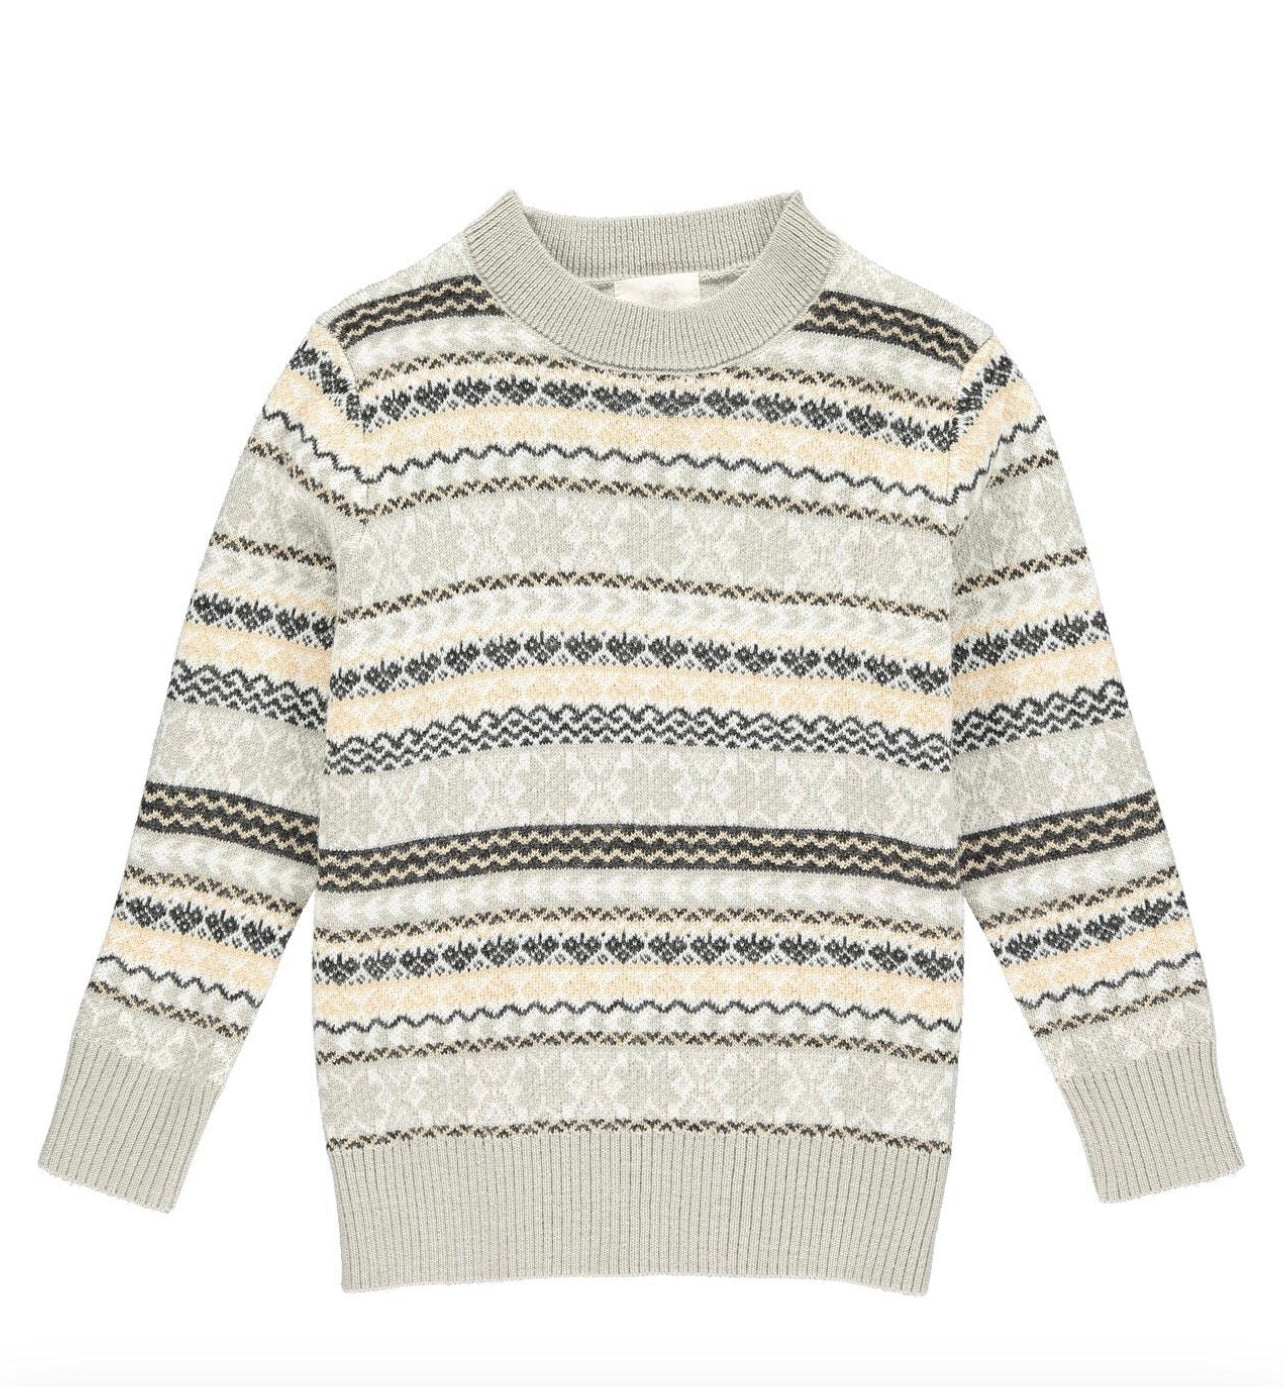 Winter Knit Sweater